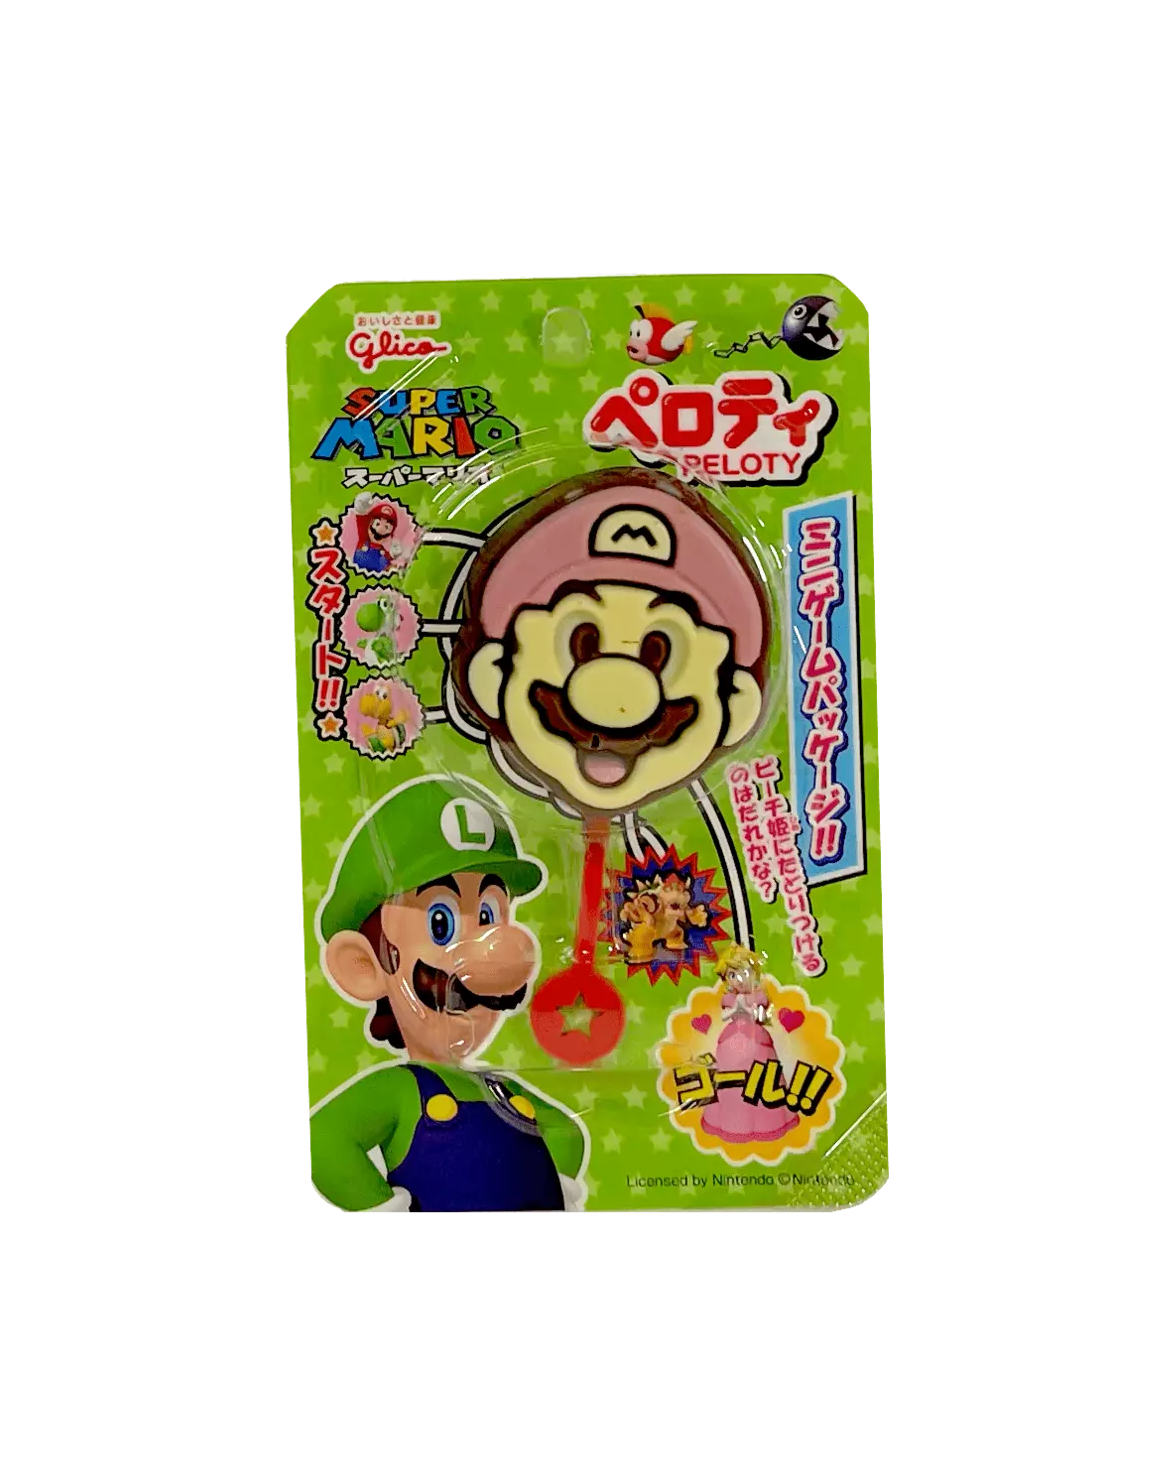 Peroty Choco Super Mario 20g Glico Japan